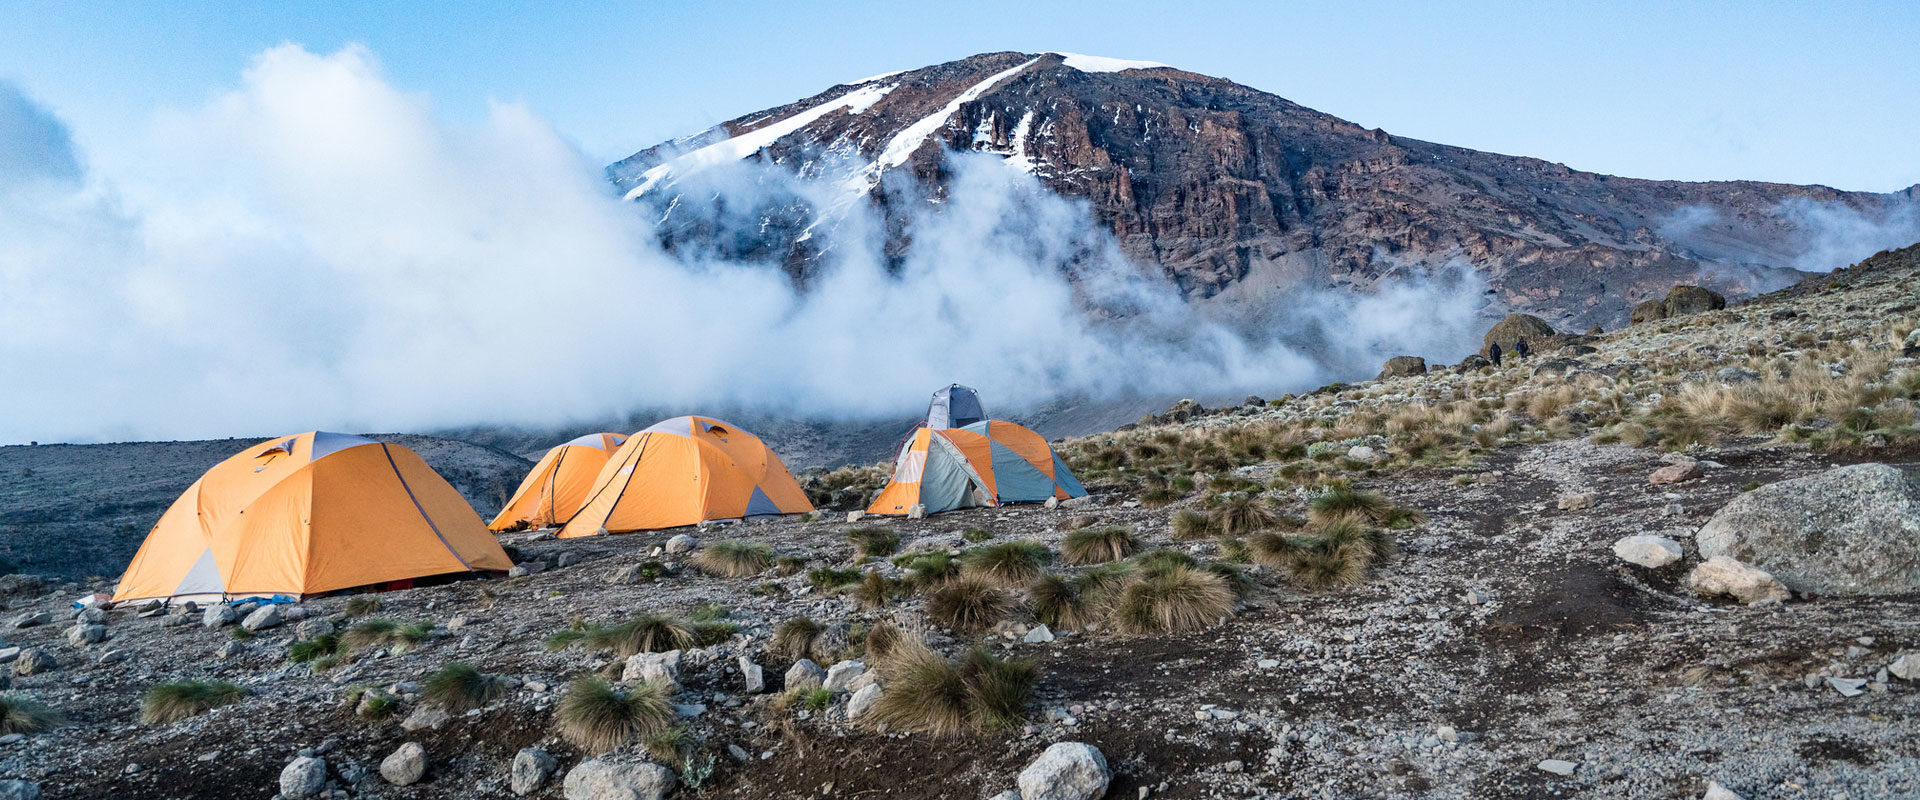 The Mount Kilimanjaro Kilimanjaro Informations